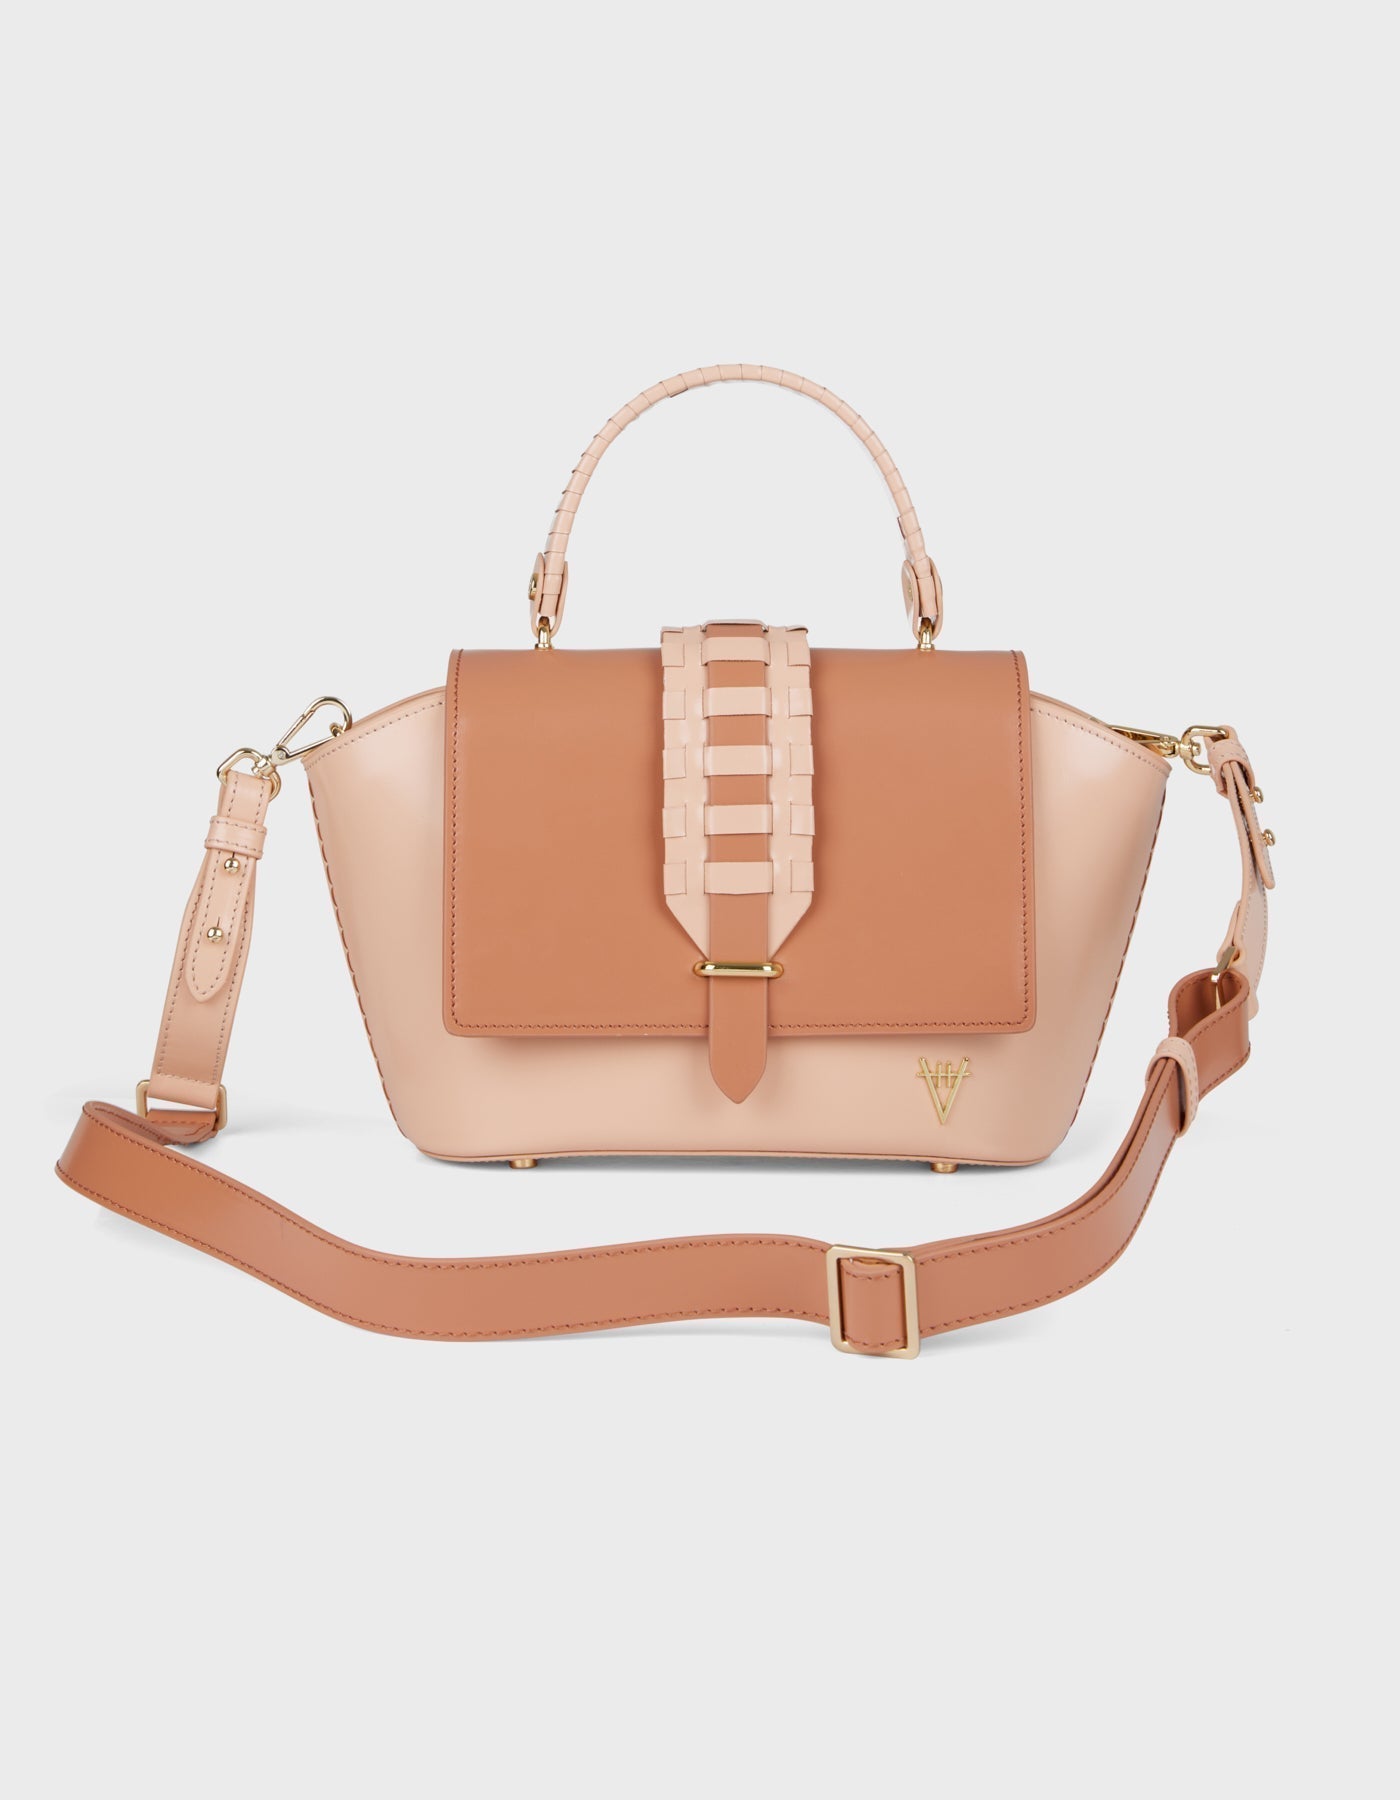 HiVa Atelier | Ventus Shoulder Bag Peach Sand | Beautiful and Versatile